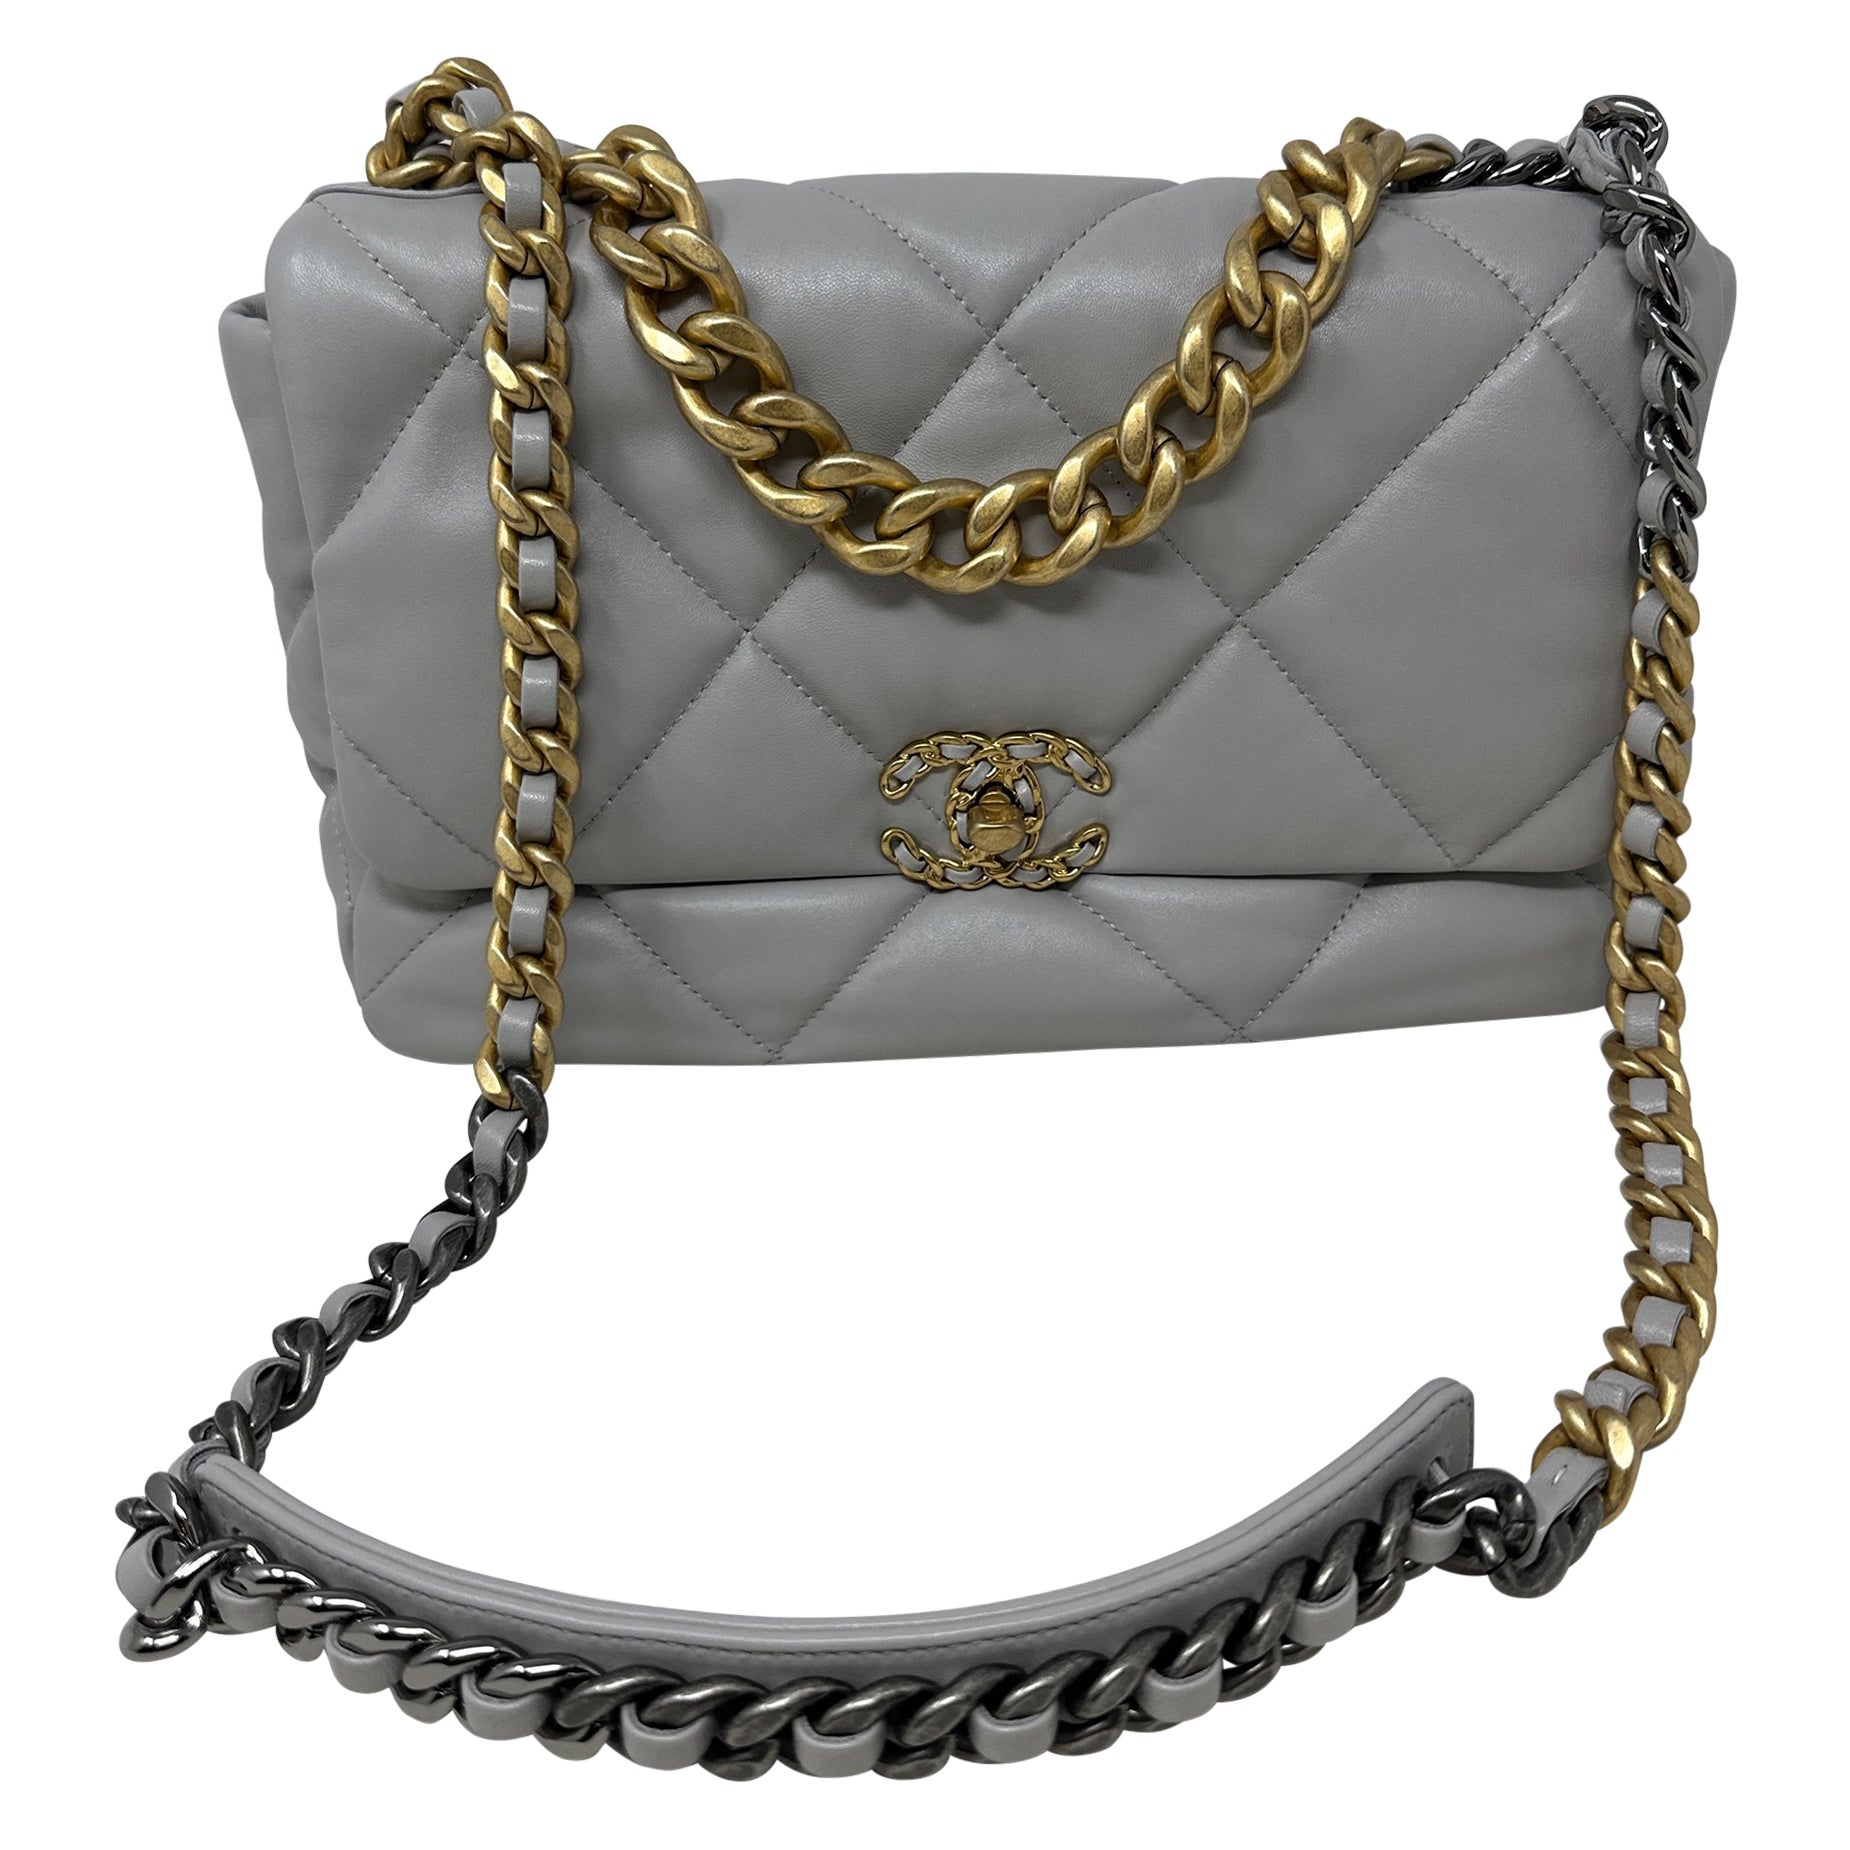 Chanel Bag 2019 - 119 For Sale on 1stDibs | 2019 chanel bags, chanel 2019  bags, chanel bags 2019